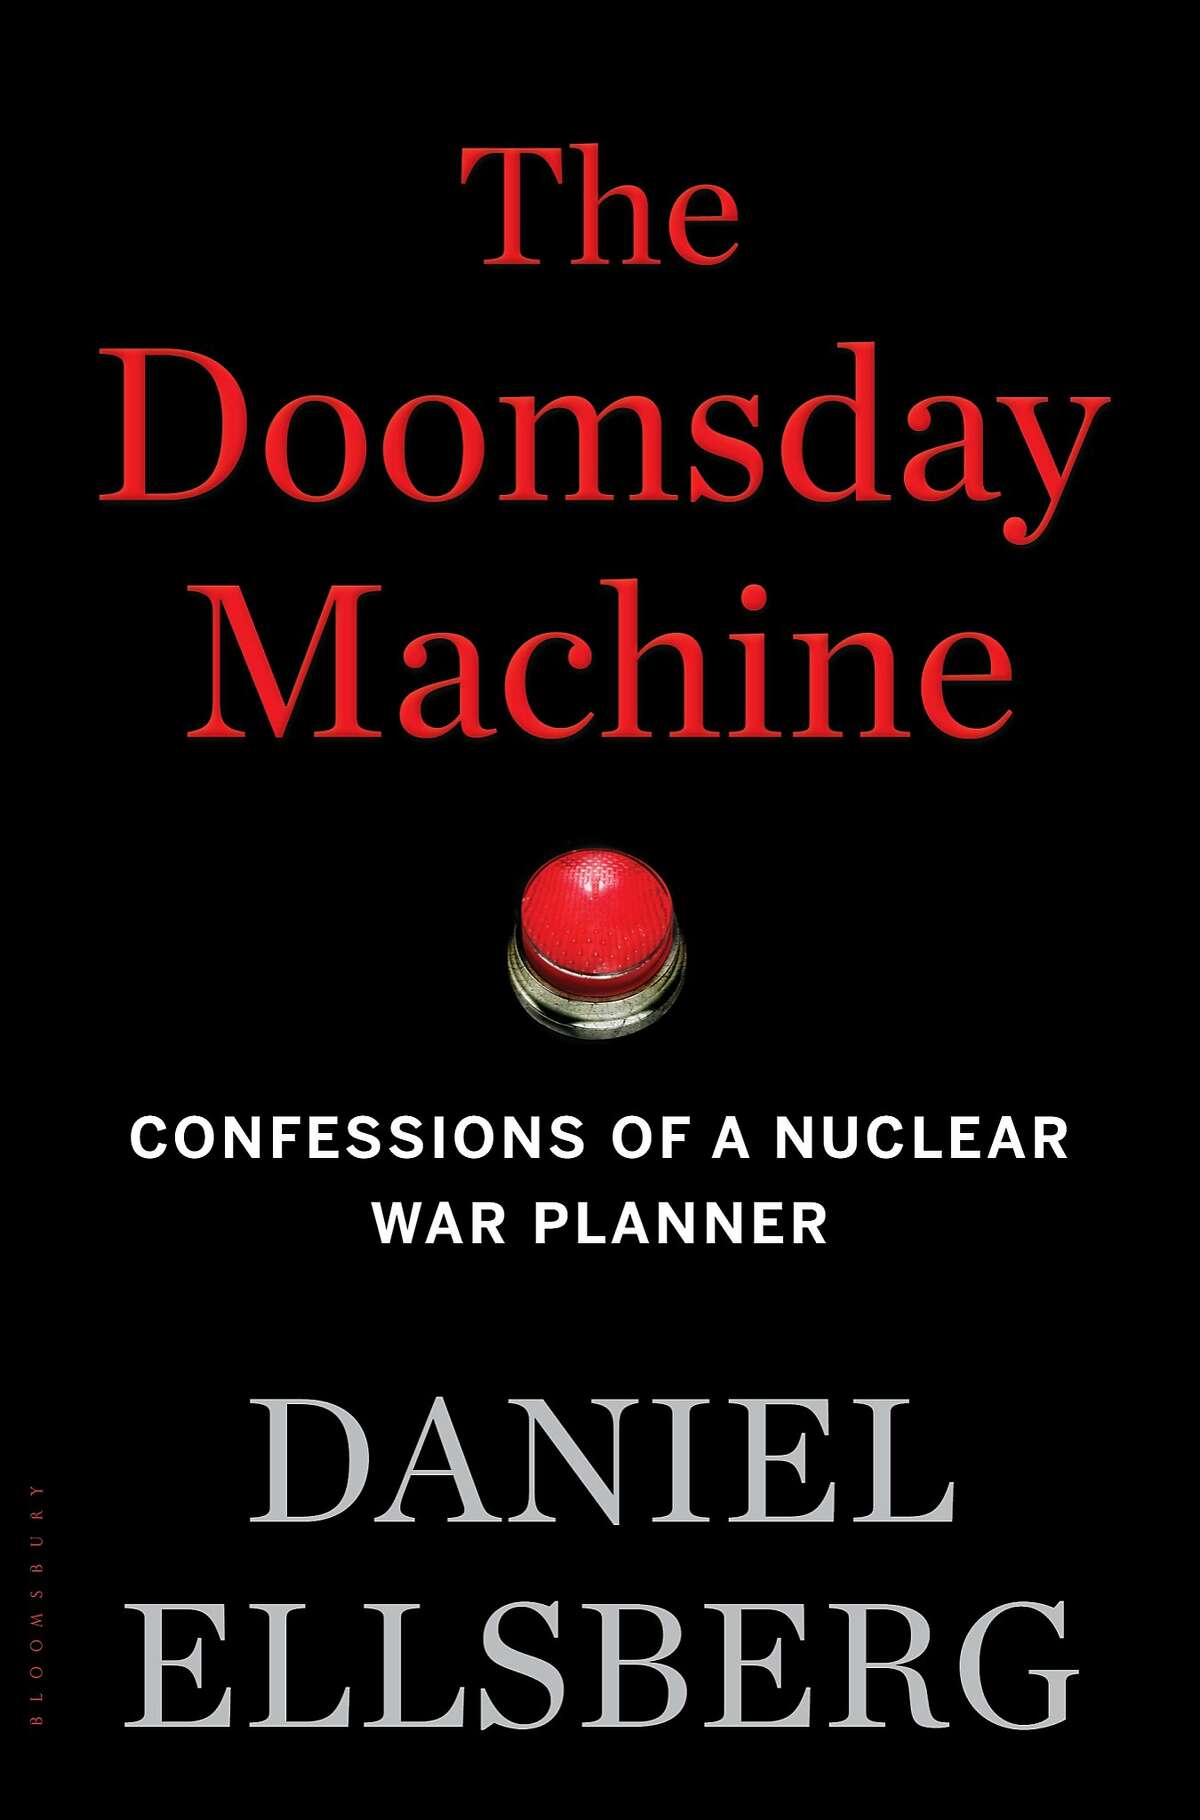 "The Doomsday Machine"